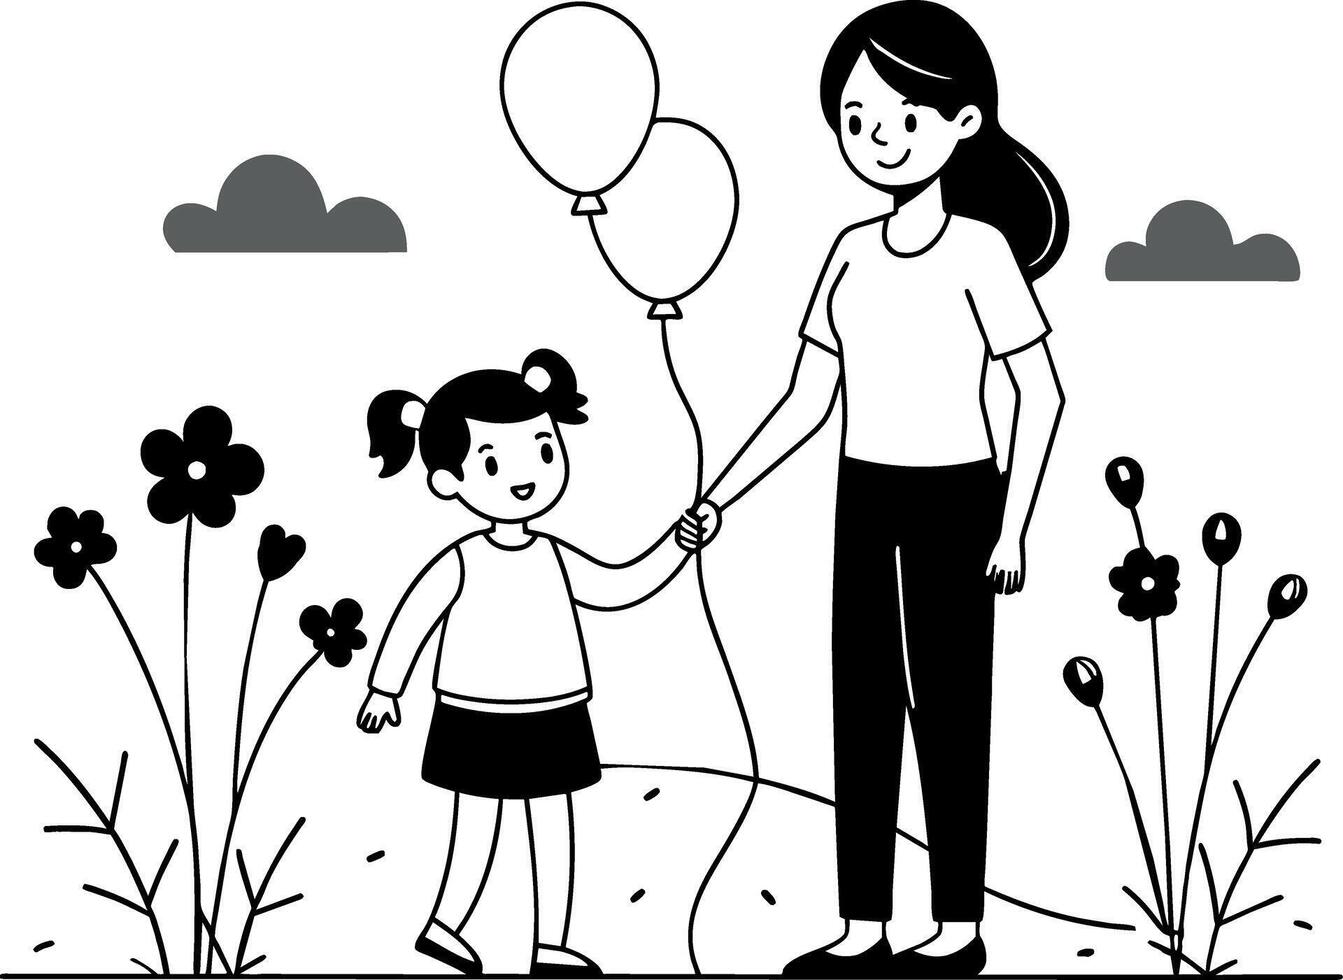 Mothers day line art illustration vector